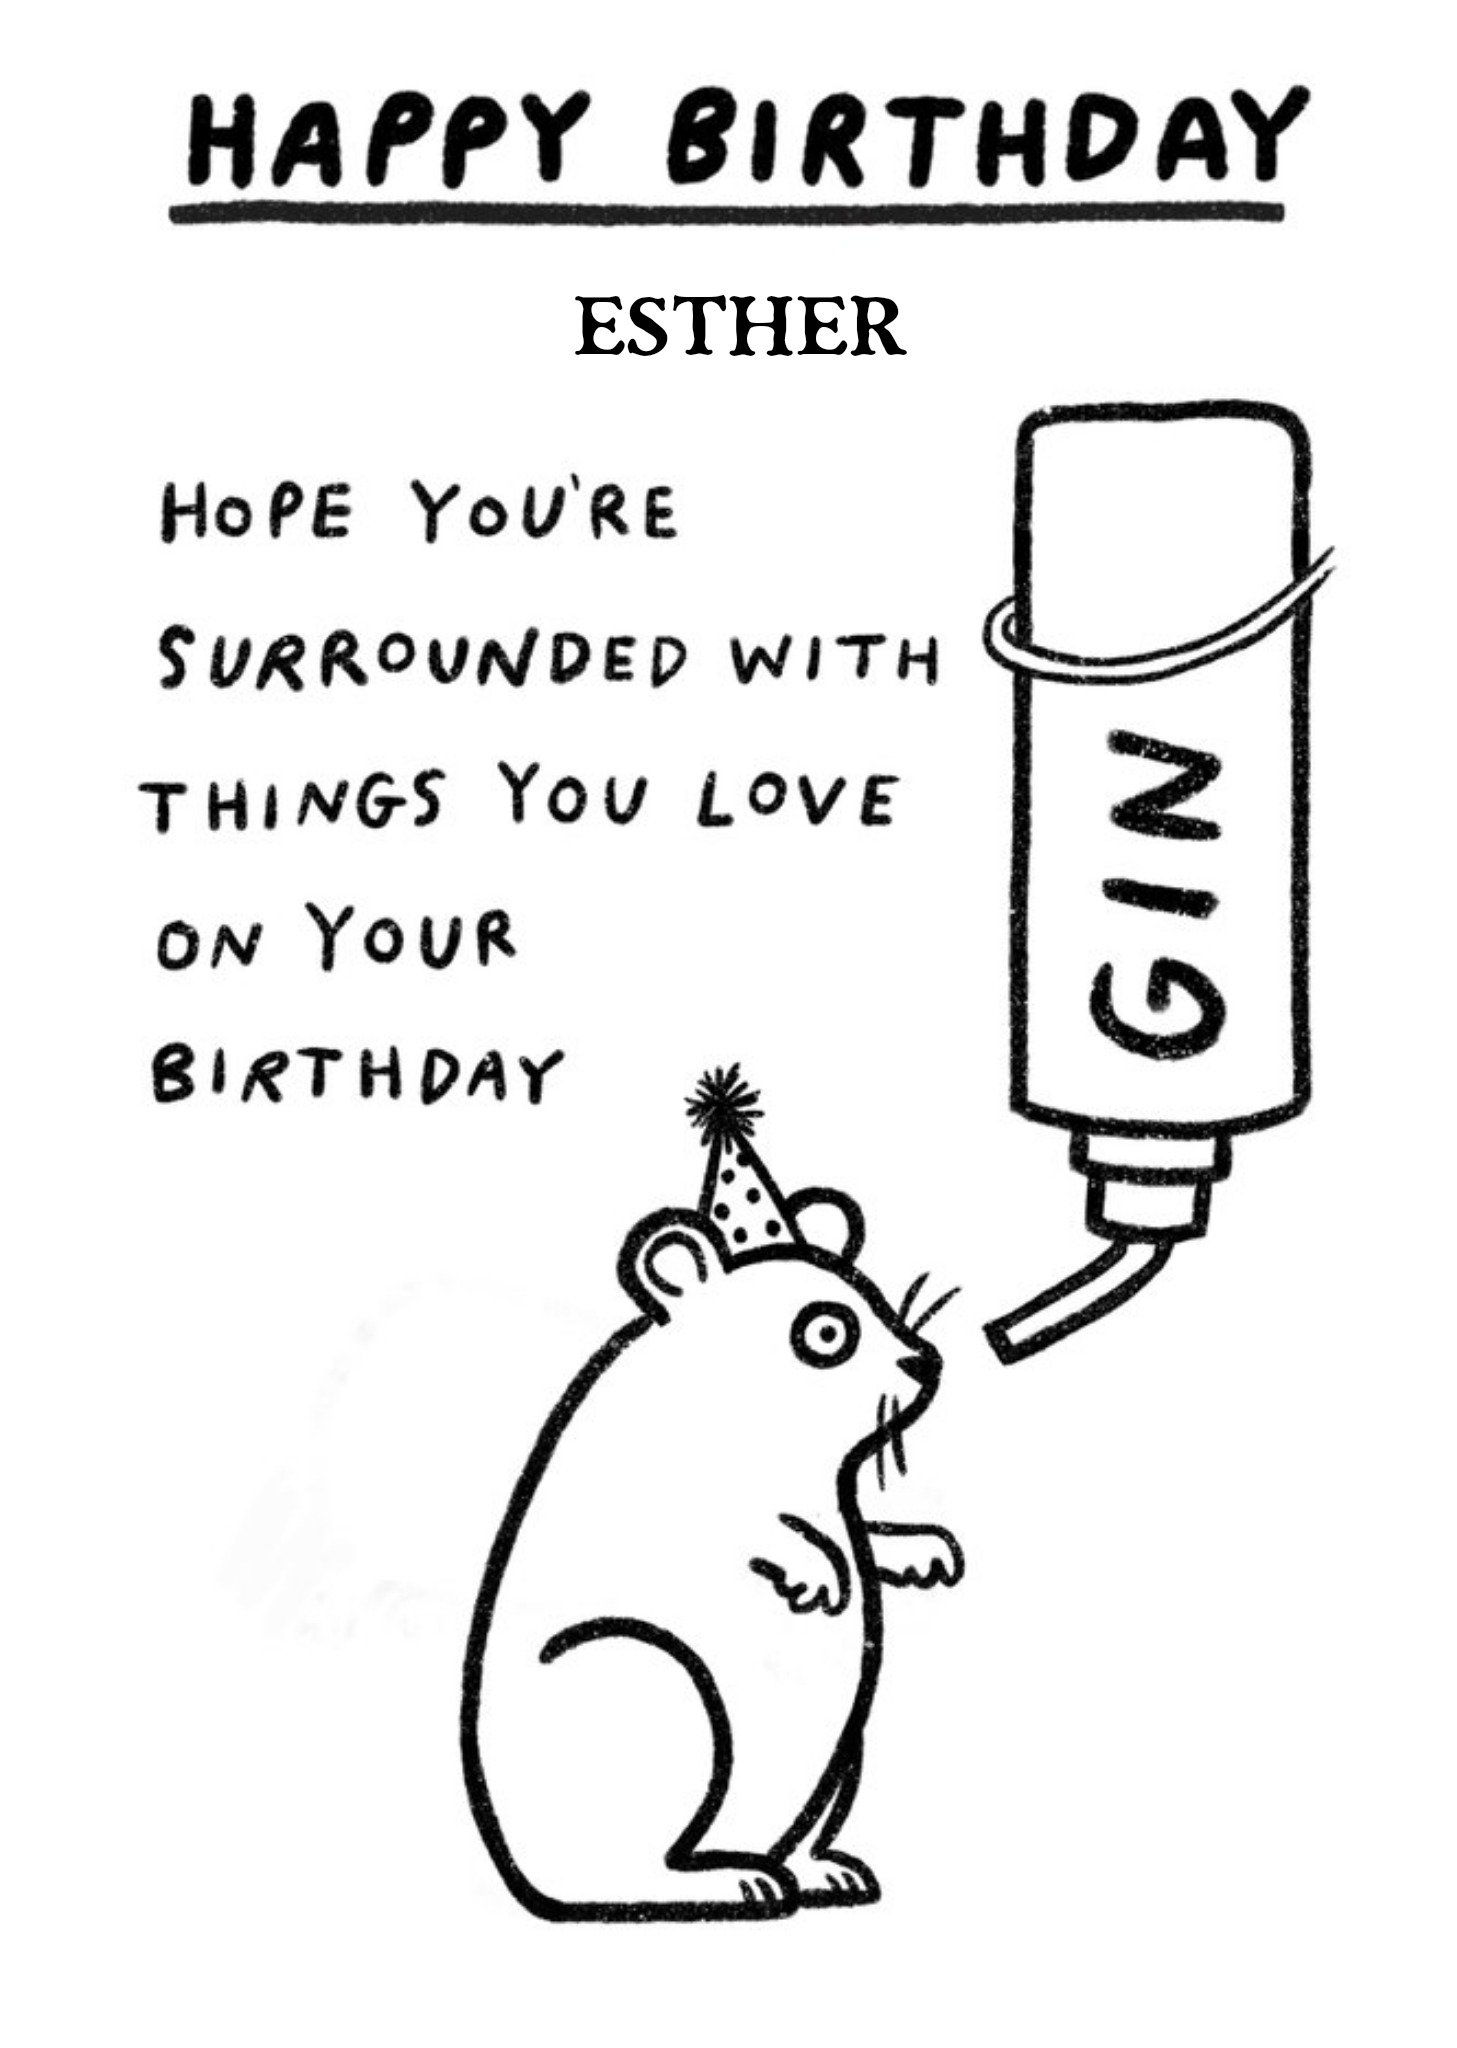 Moonpig Pigment Hamster Drinking Gin Happy Birthday Card, Large